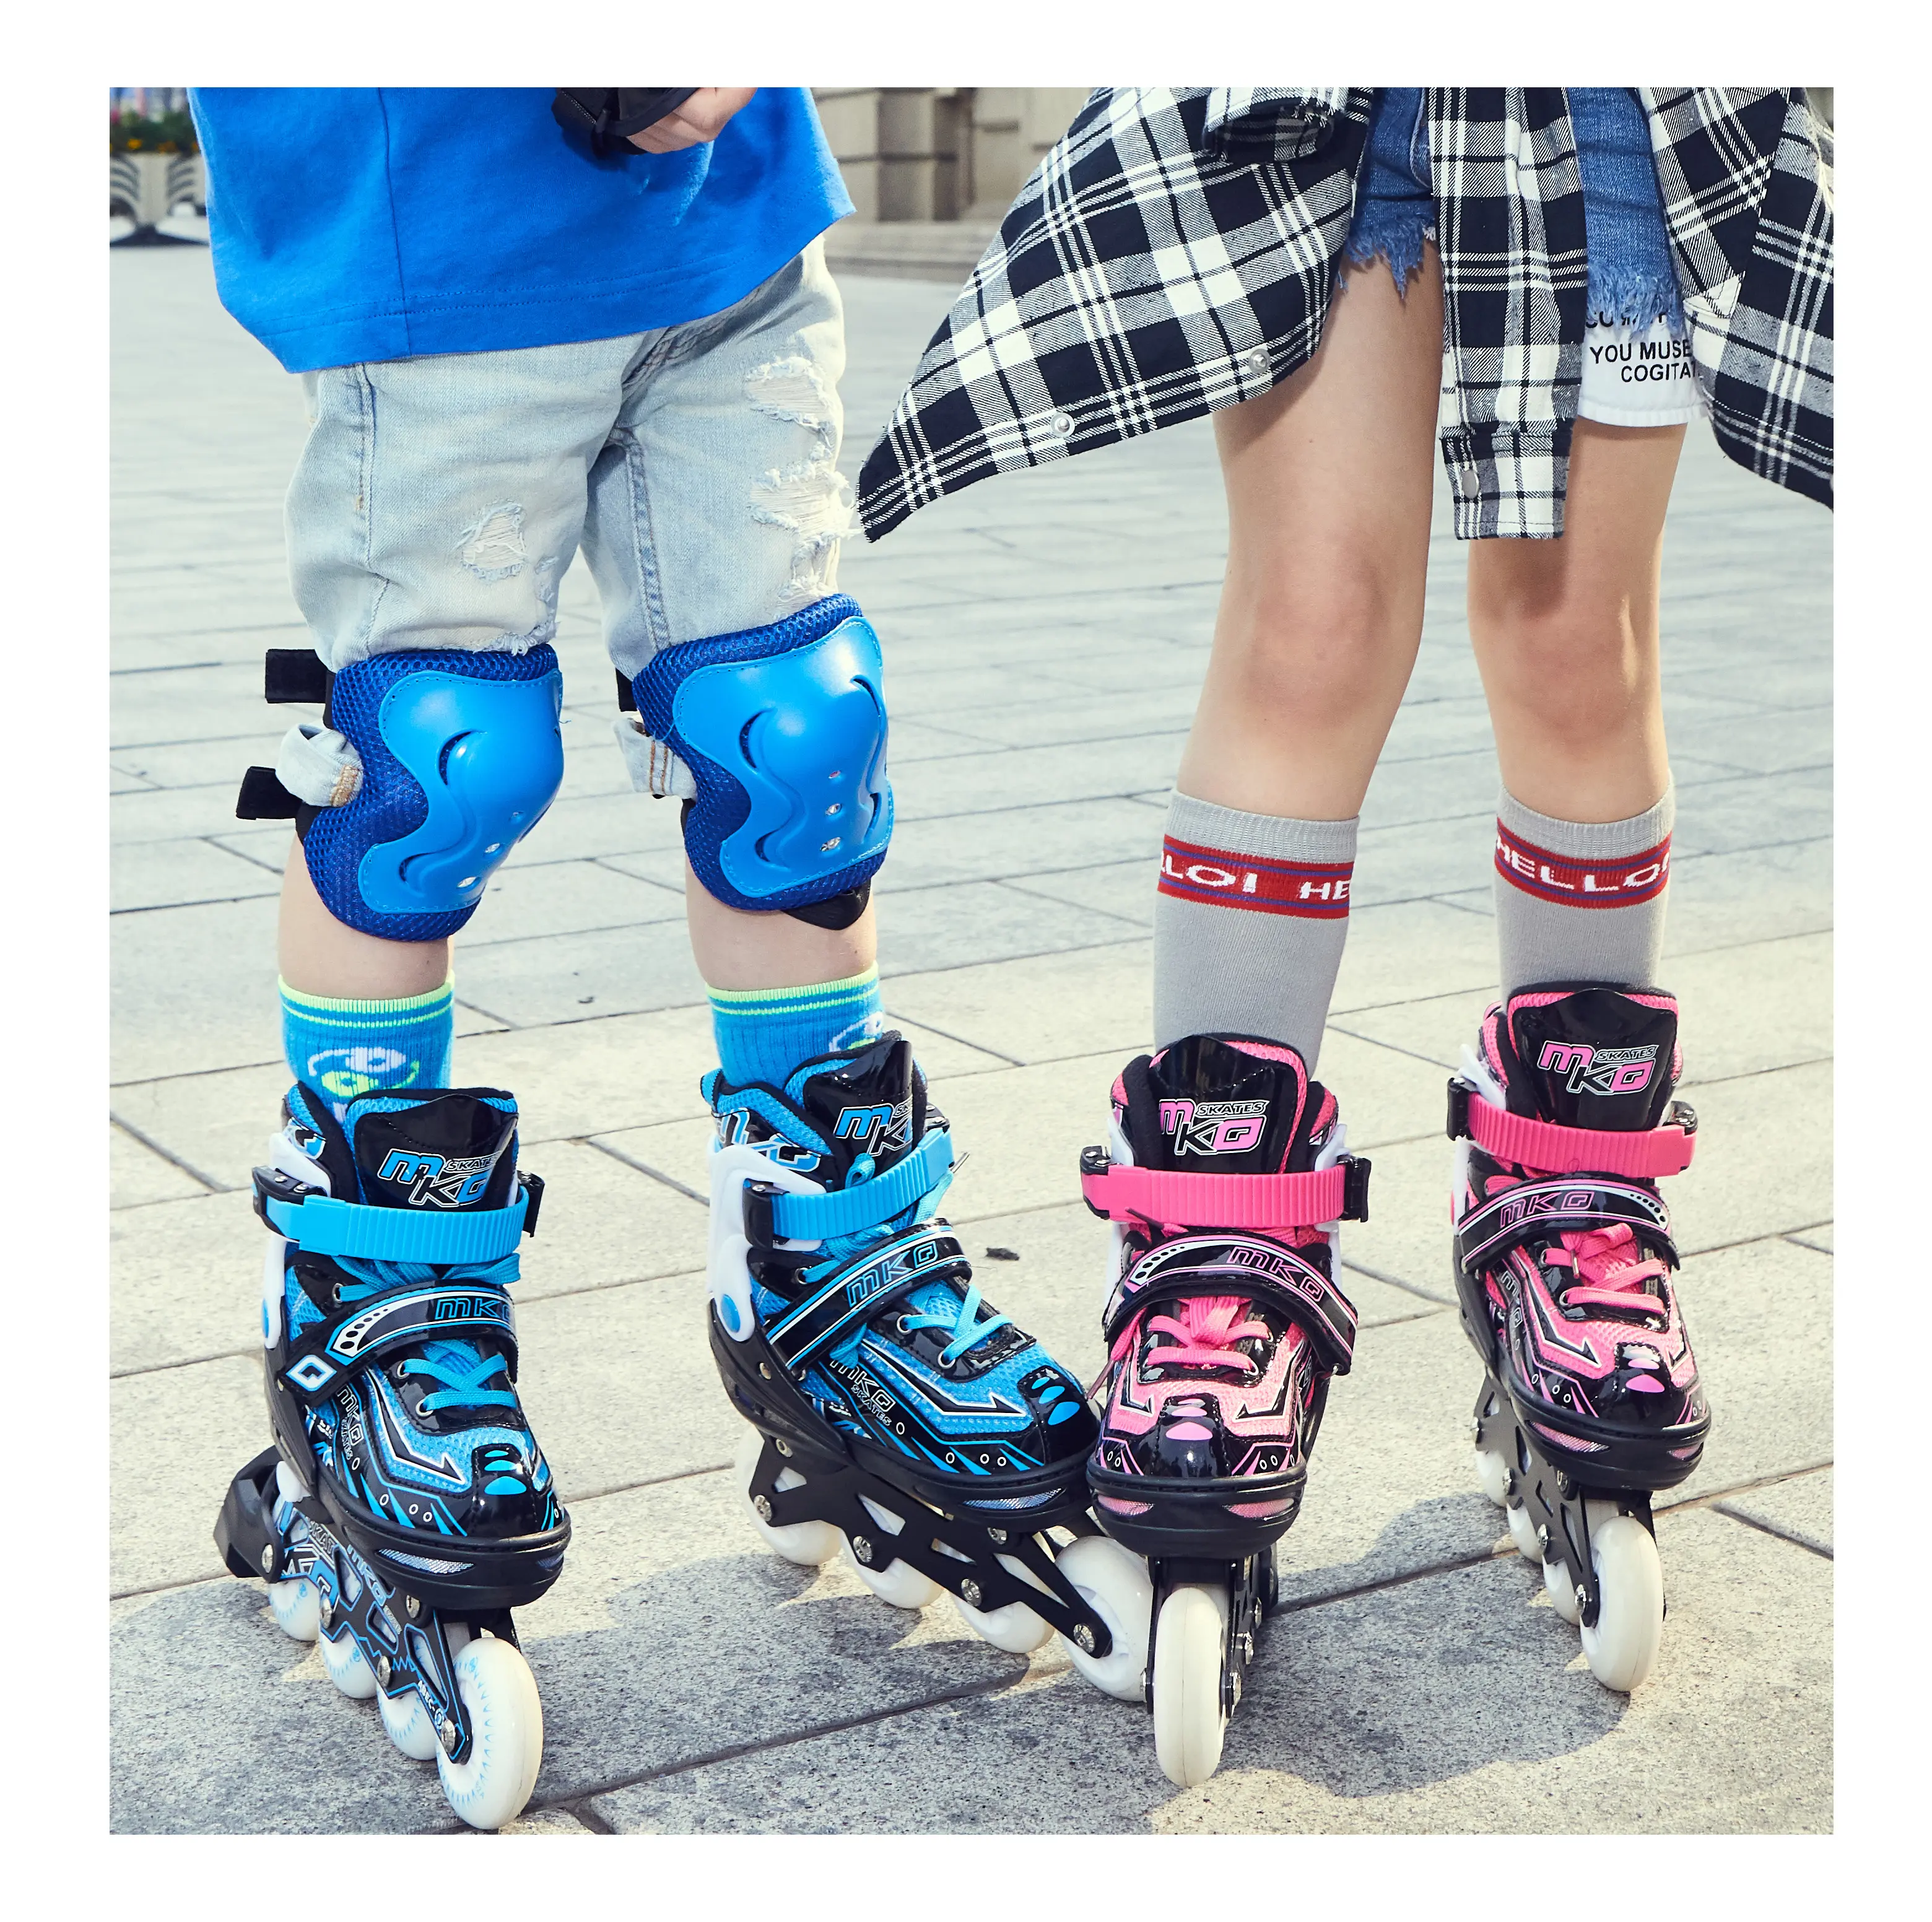 EACHkids समायोज्य इनलाइन रोलर स्केट्स के लिए Ruedas डे Patin रोलर स्केटिंग जूते बच्चों लड़की लड़का